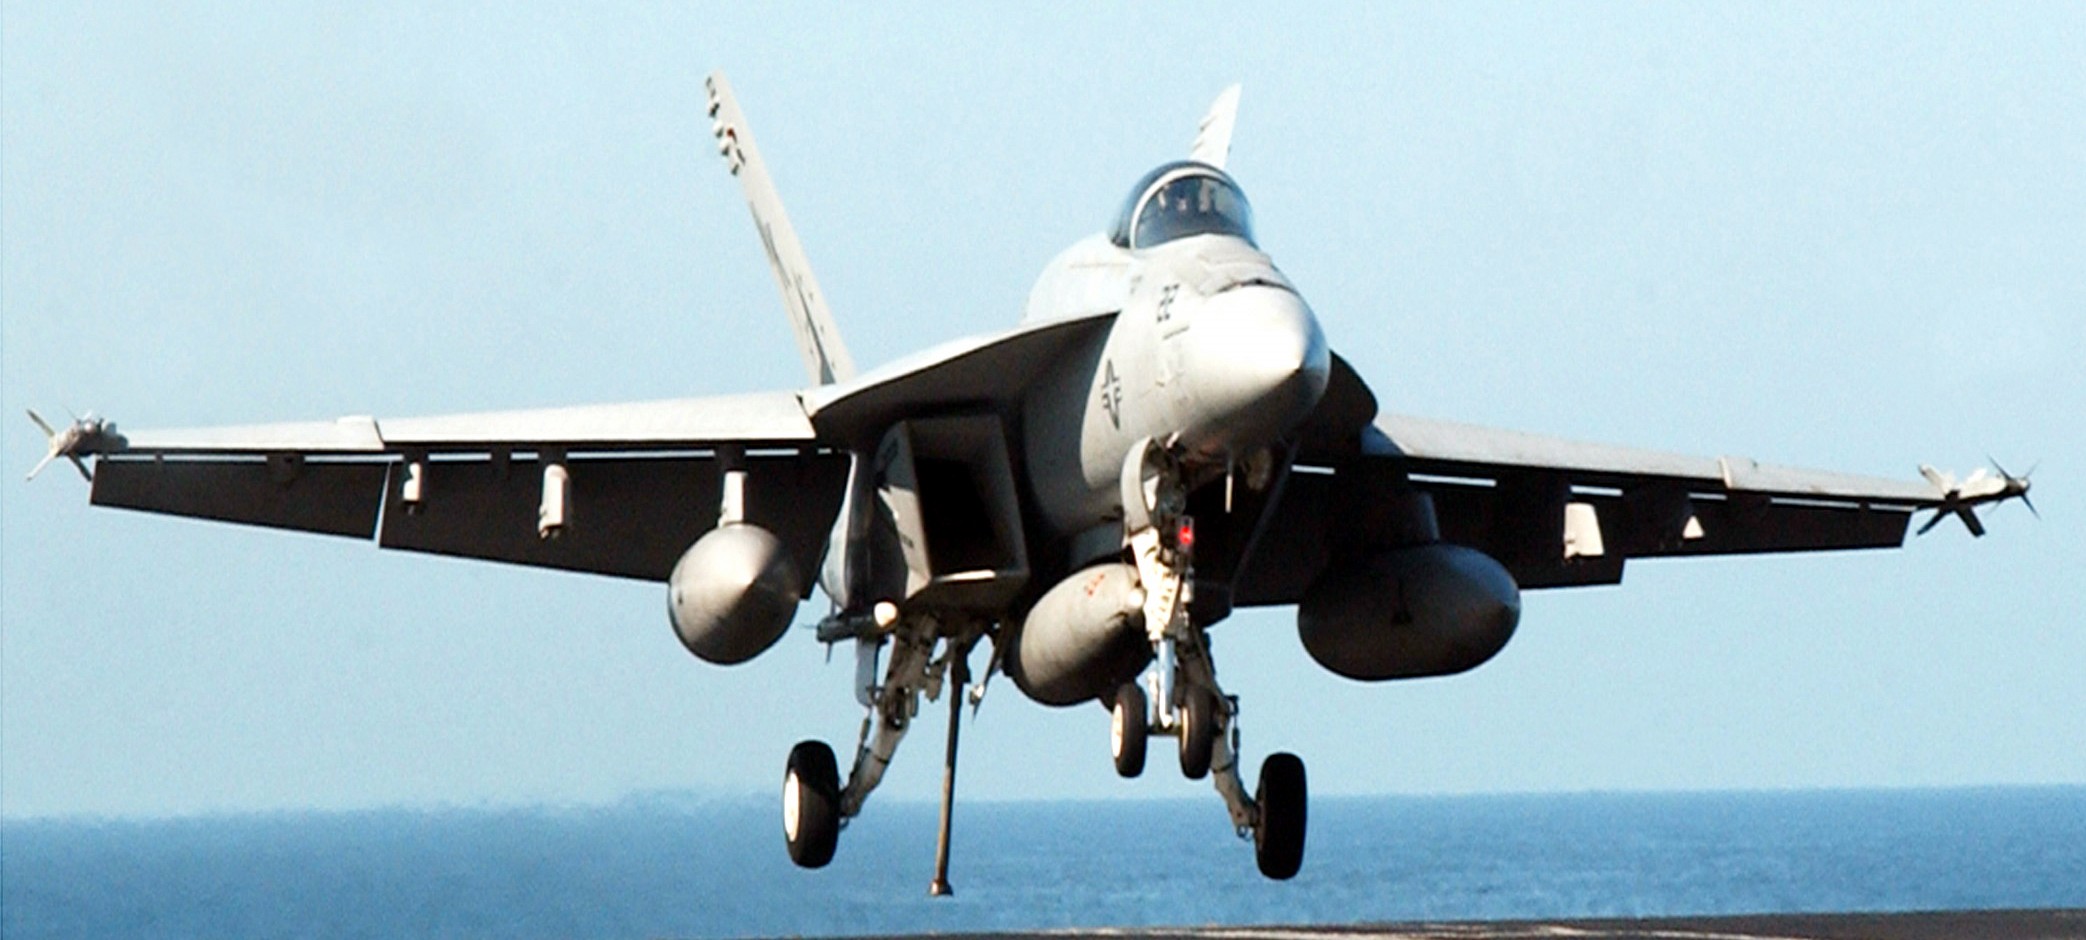 vfa-115 eagles strike fighter squadron f/a-18e super hornet cvw-14 uss abraham lincoln cvn-72 2002 68